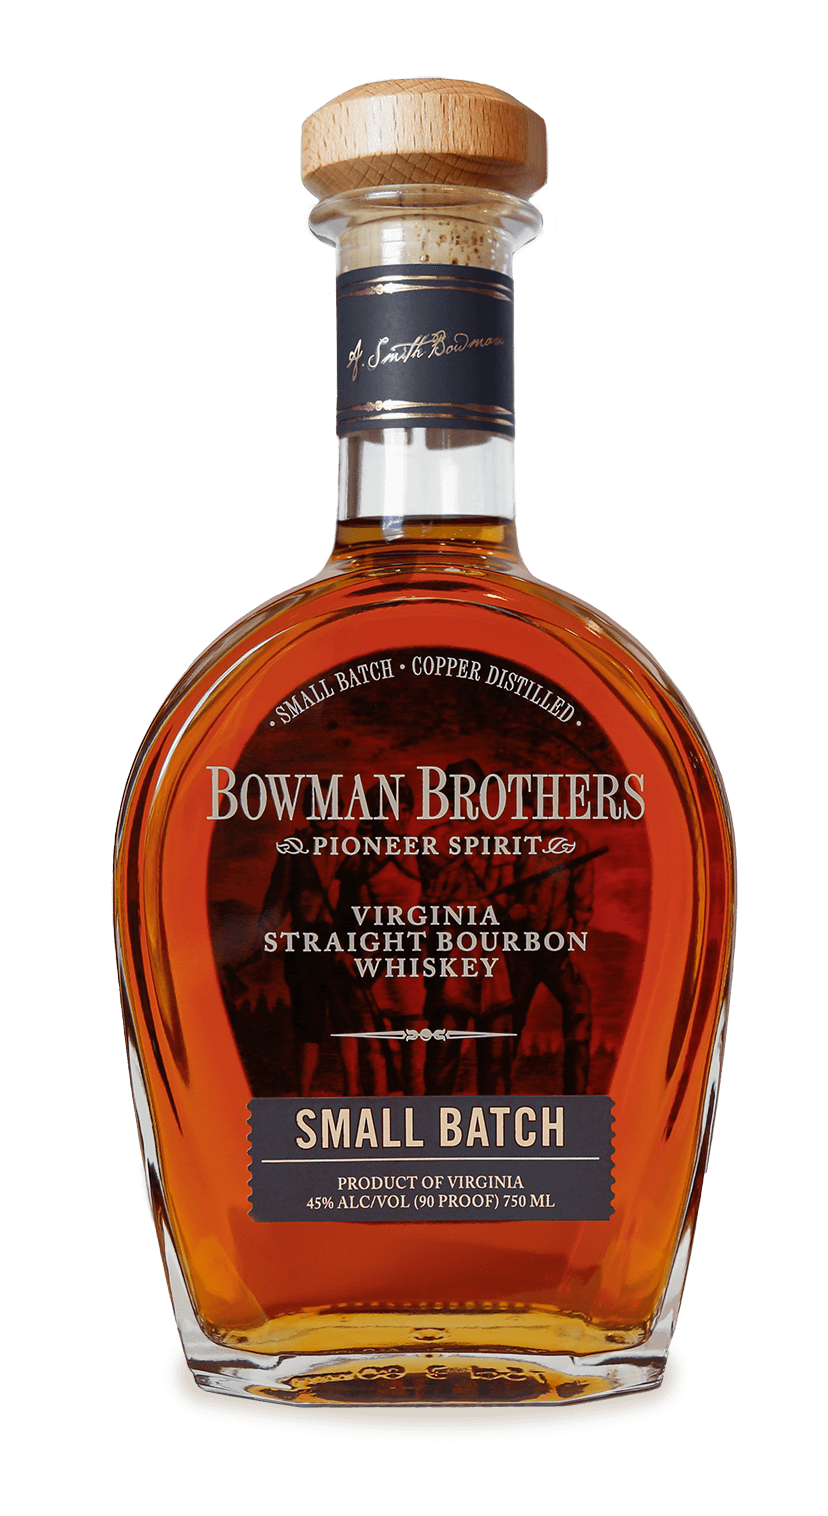 A. Smith Bowman Distillery 'Bowman Brothers' Pioneer Spirit Small Batch Virginia Straight Bourbon Whiskey